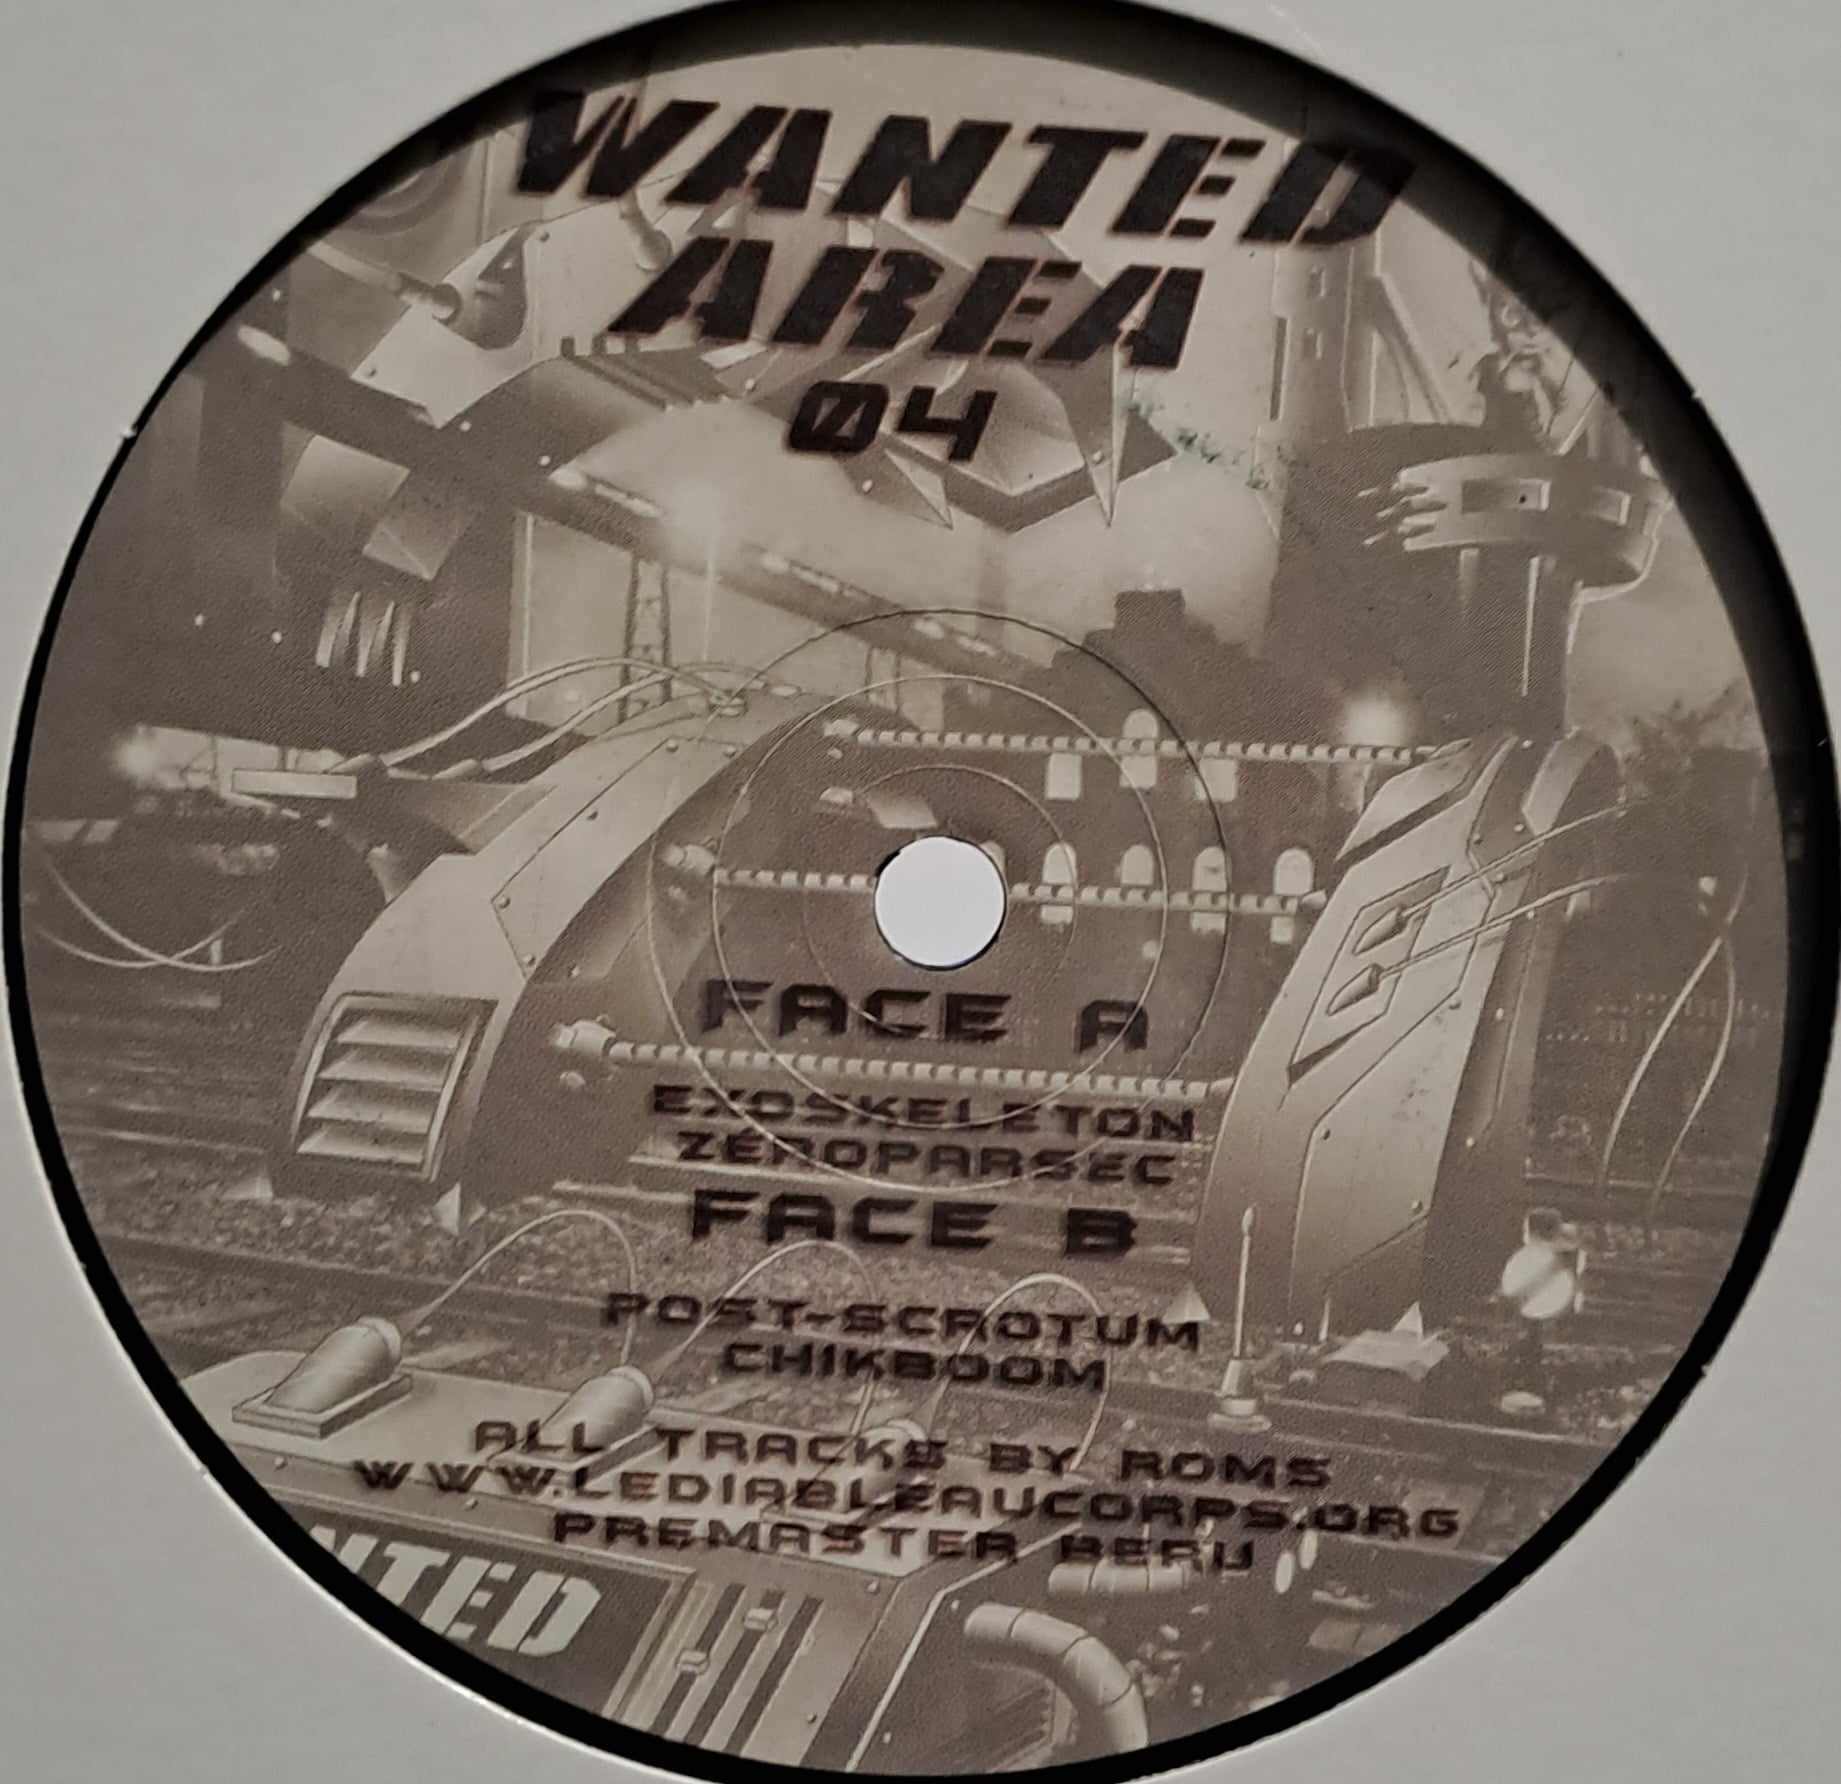 Wanted Area 004 - vinyle freetekno